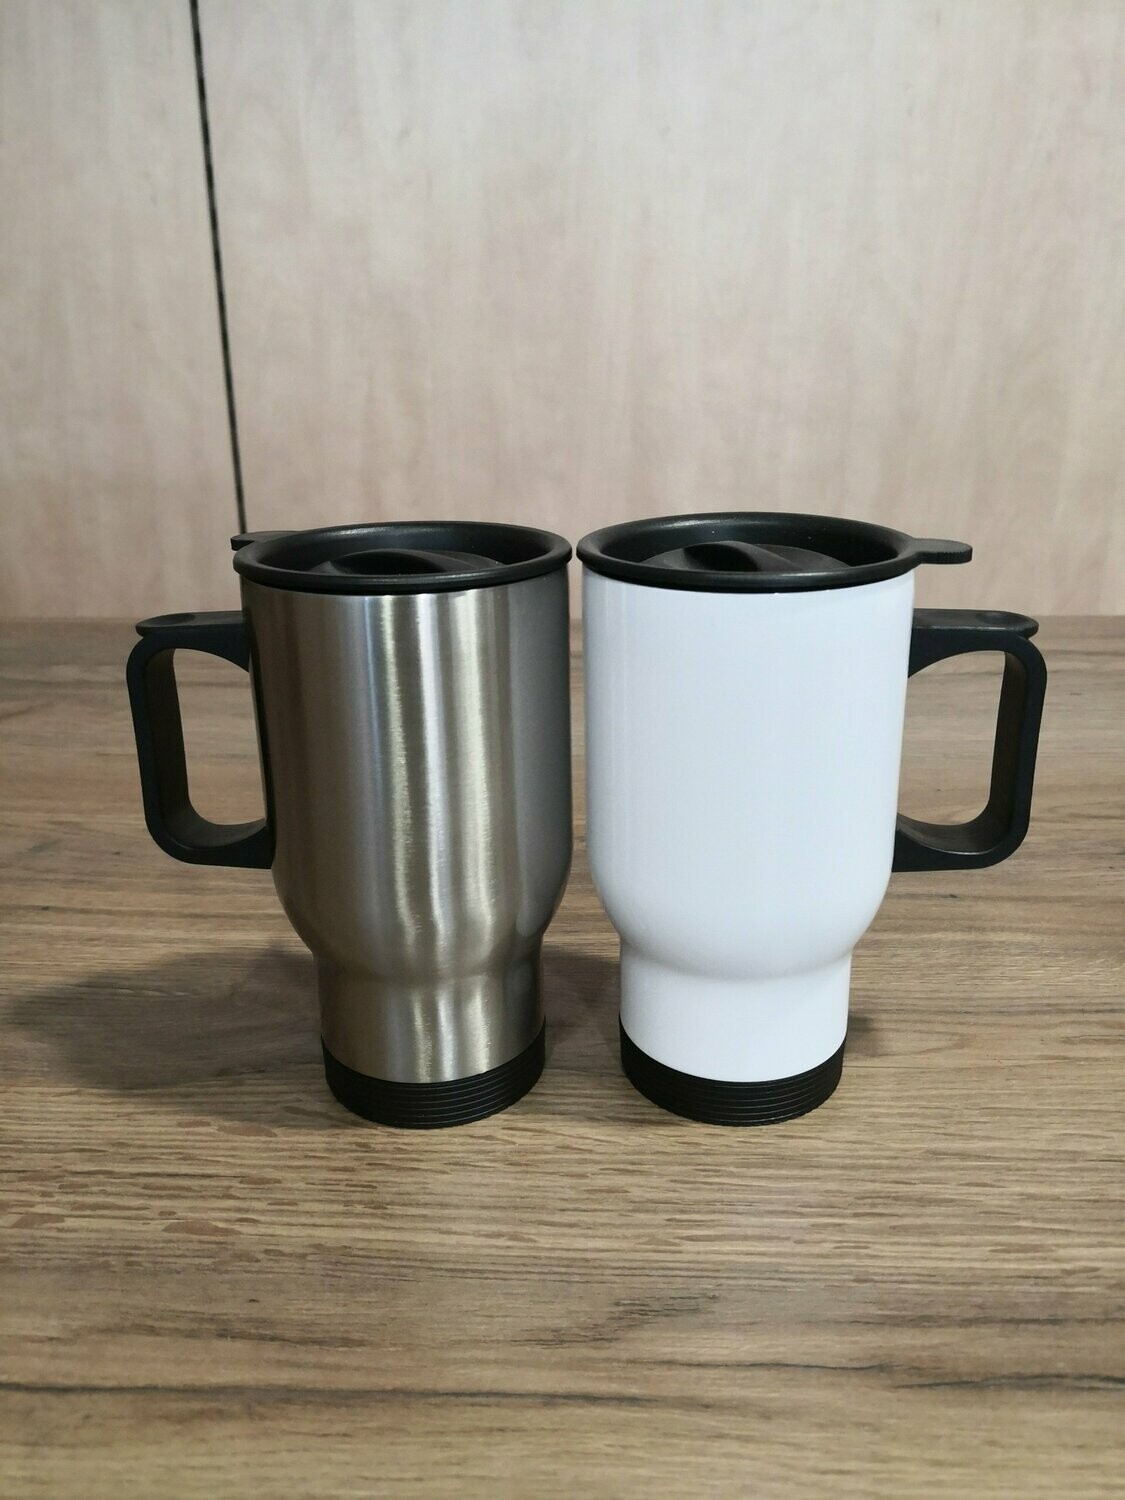 450ml stainless steel car mugs